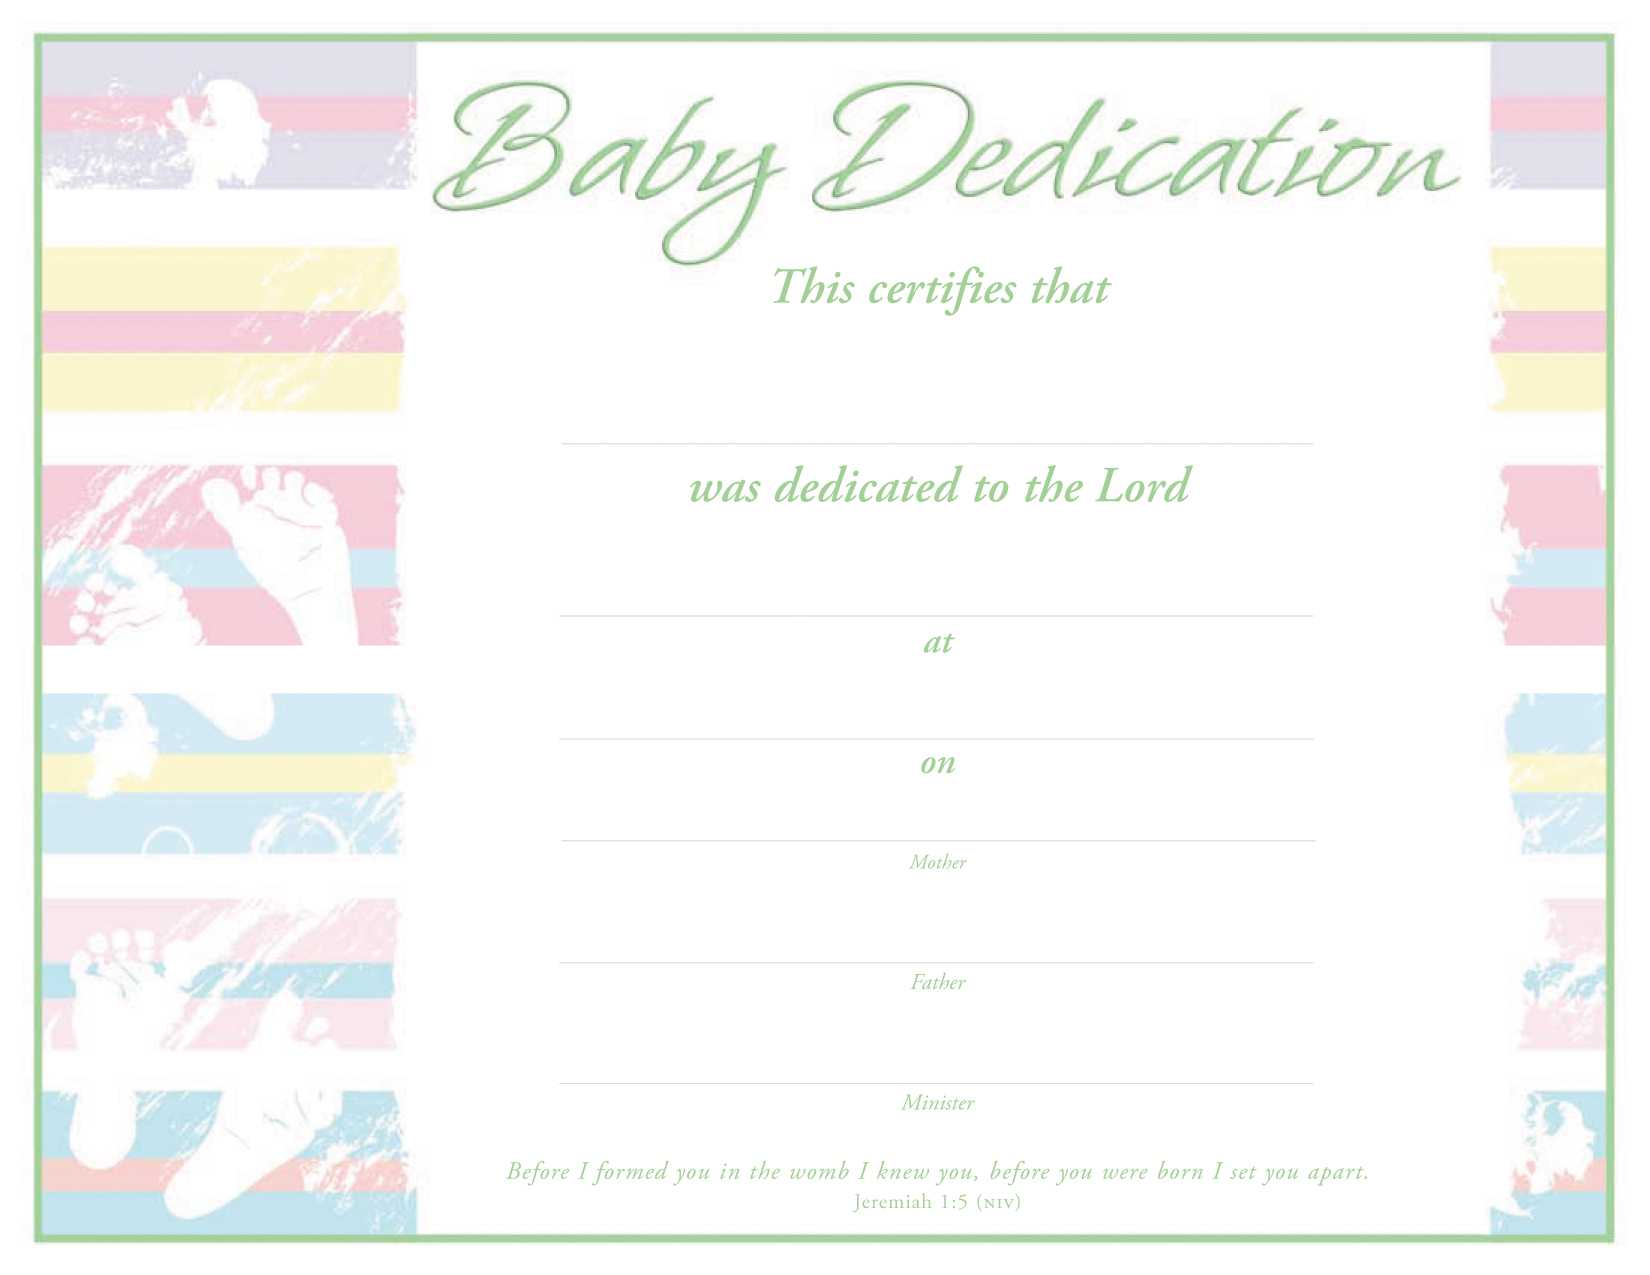 Baby Dedication Certificate – Certificate – Dedication With Baby Dedication Certificate Template